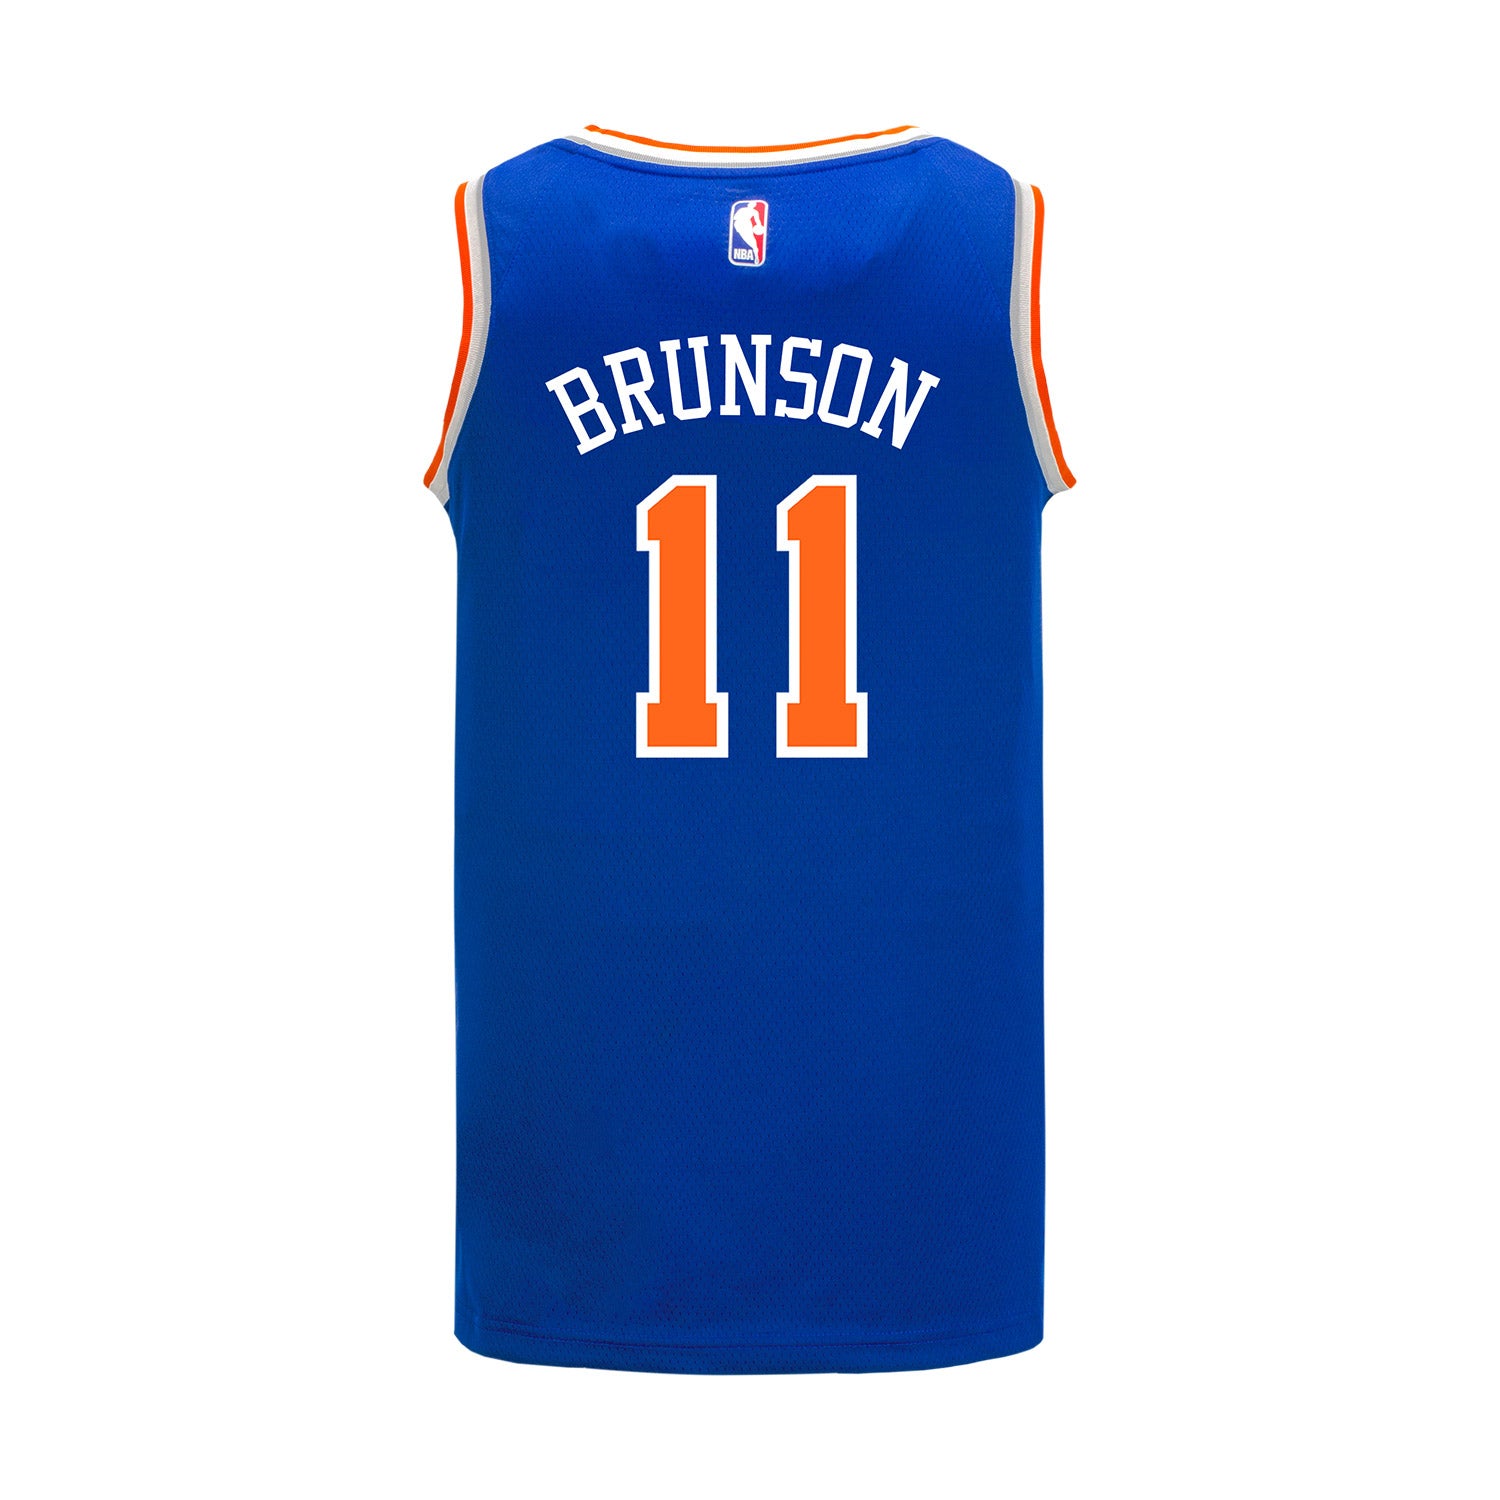 Jalen Brunson Knicks Jersey for Babies, Youth, Women, or Men